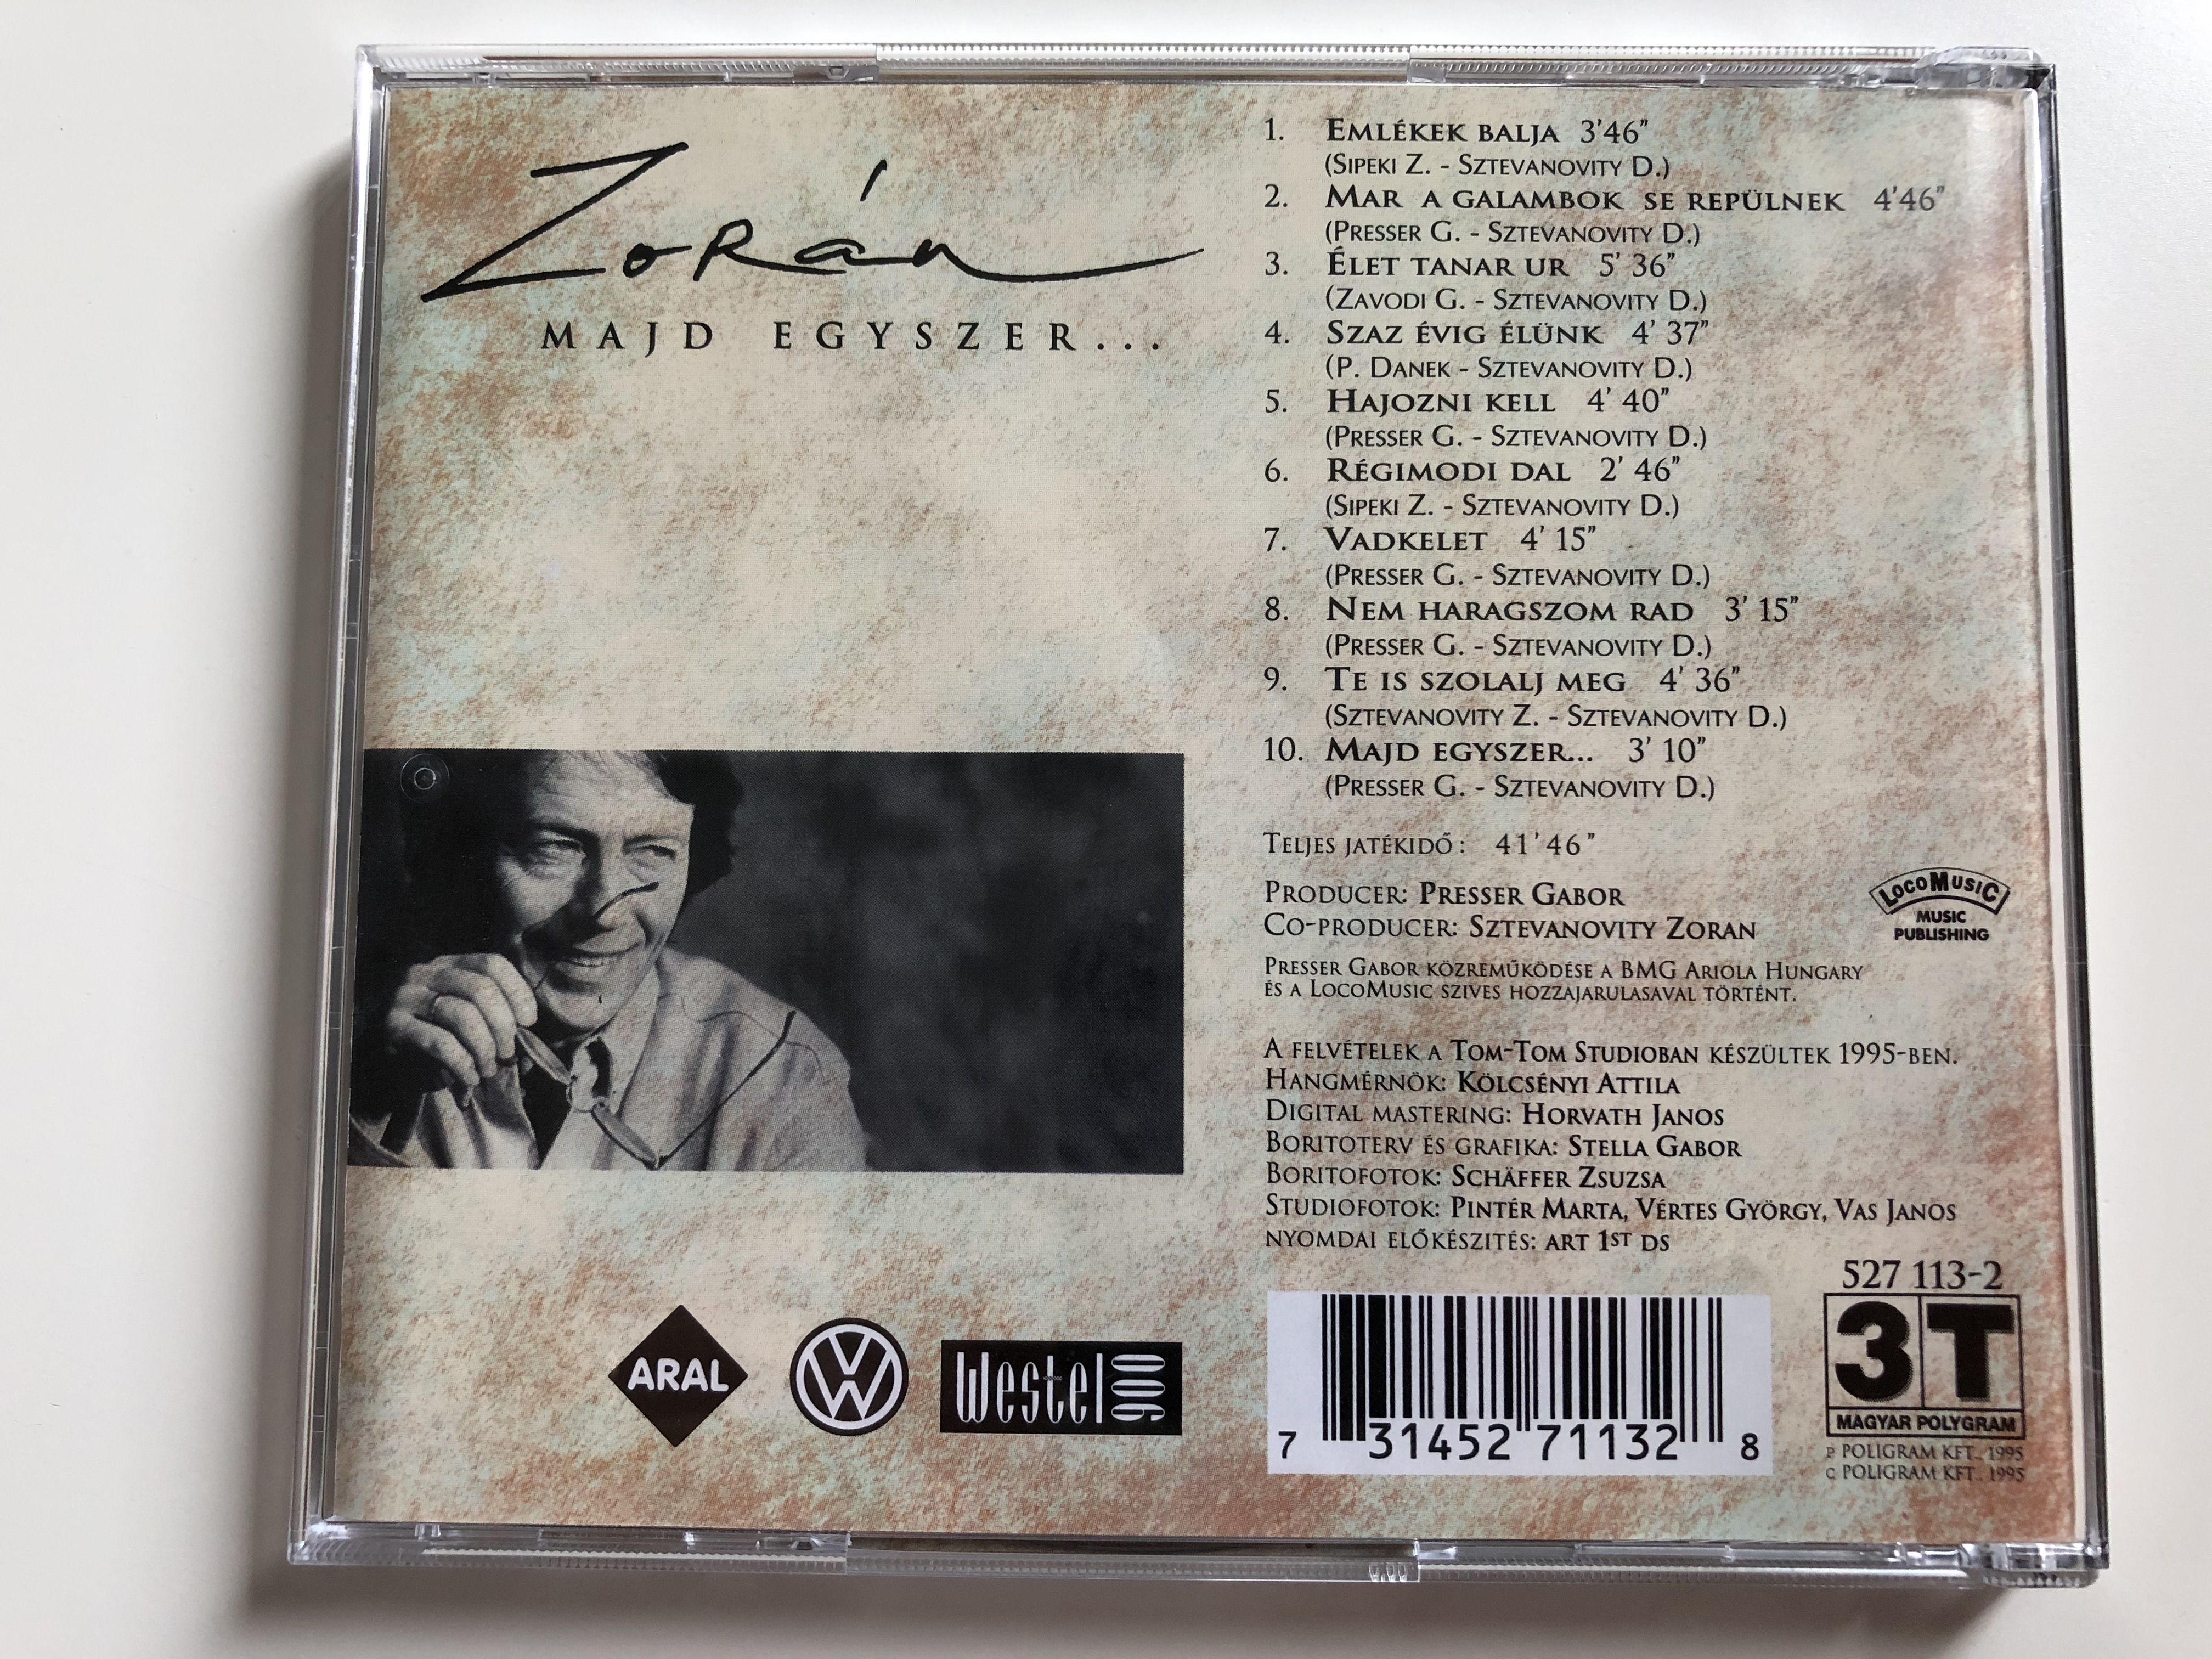 zor-n-majd-egyszer...-3t-audio-cd-1995-527-113-2-8-.jpg